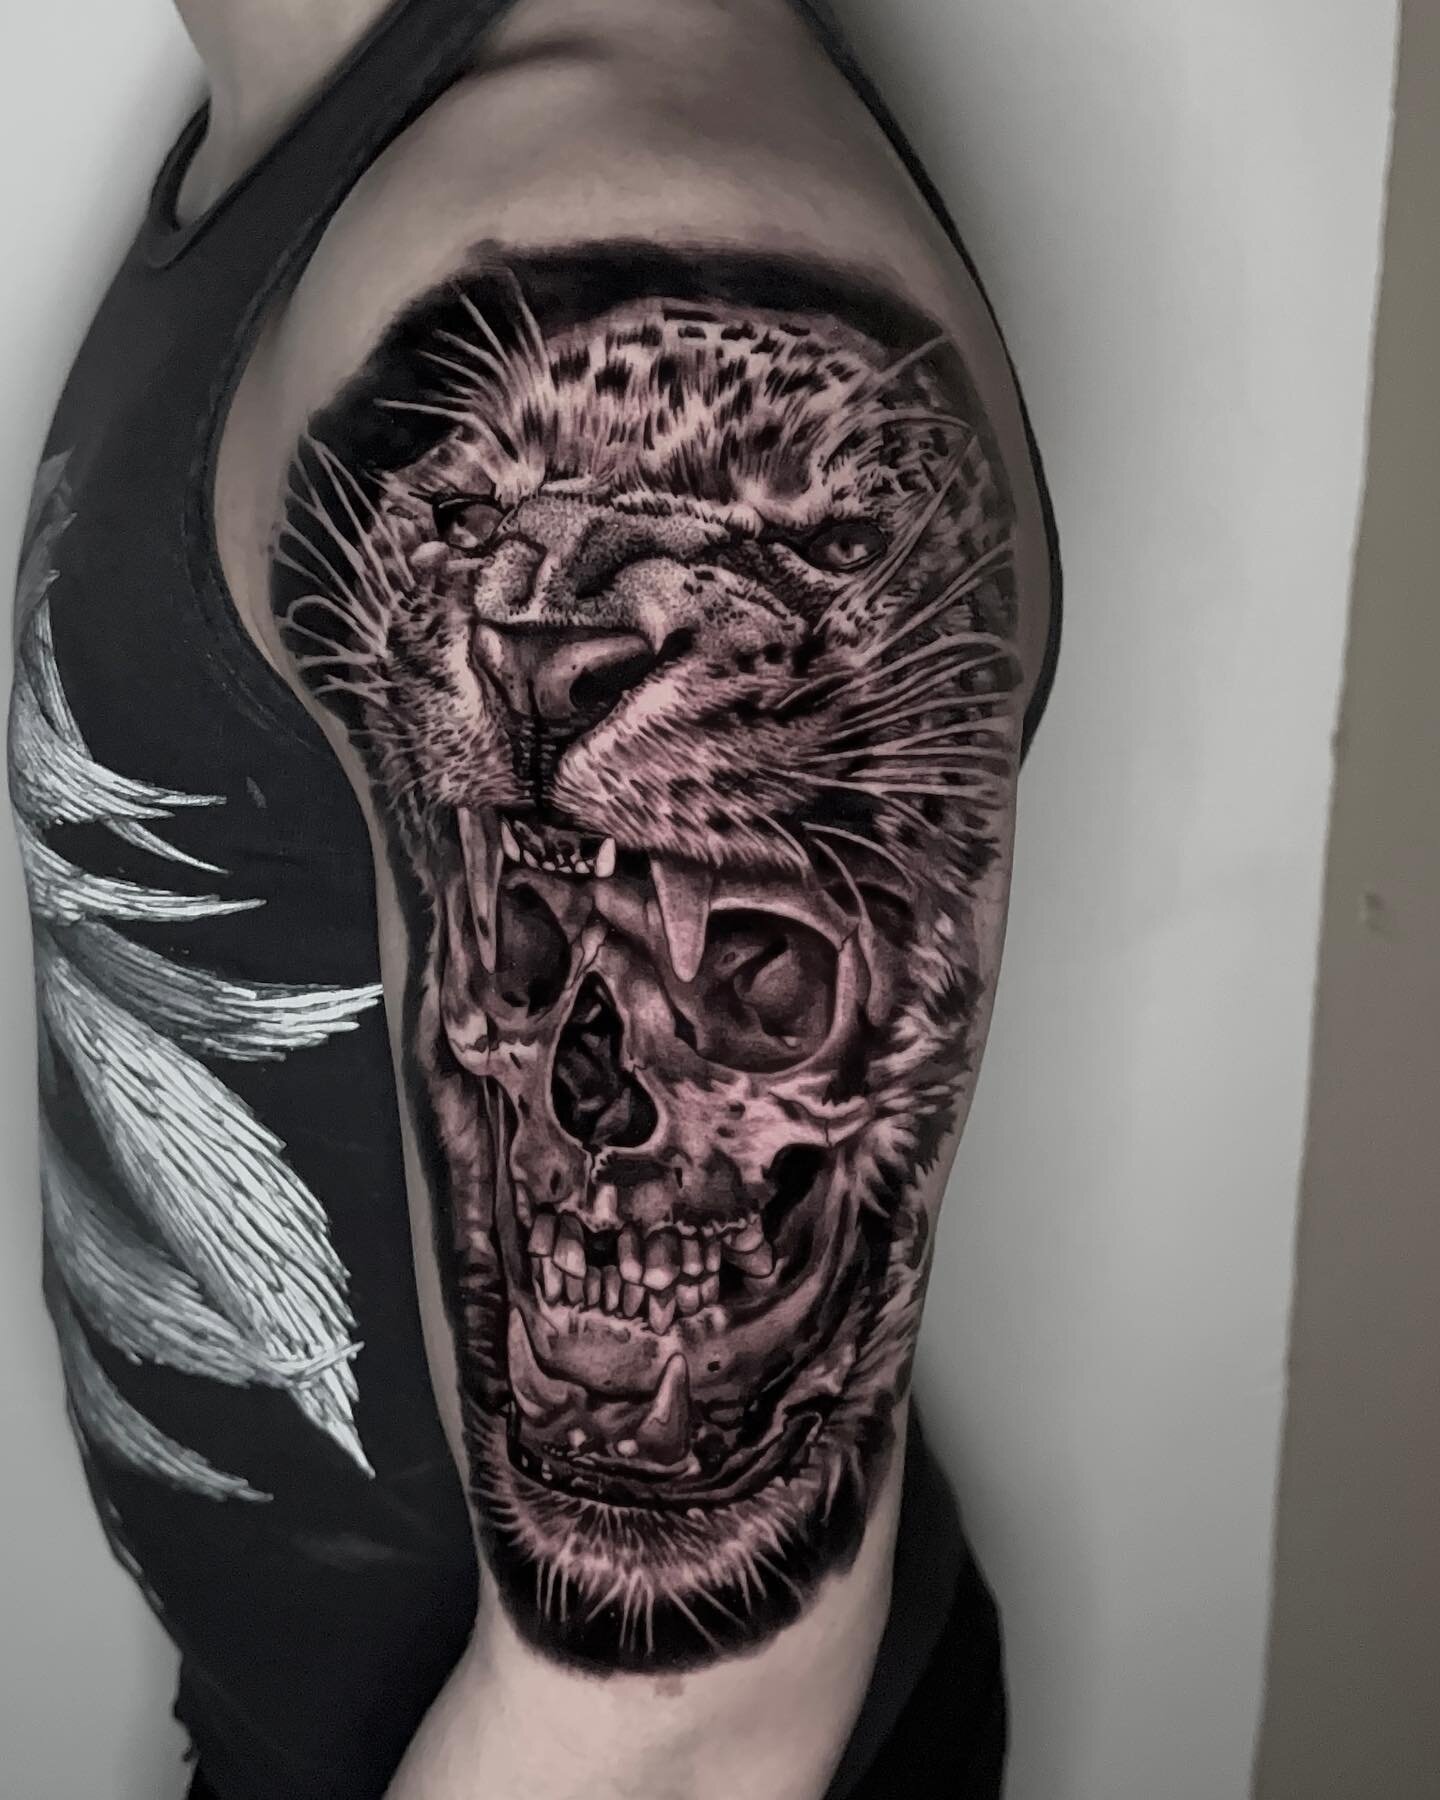 Aztec inspired skull and leopard 
.
.

.
.
.
.

@sharktooth_tattoo 
@industryinks 
@hivecaps 
@dipcaps 
@hustlebutterdeluxe 
@jetblacksupply
@recoveryaftercare 
@theinkarm 
@mavericktattoomercantile 
@kinggriptattoosupply 
.
.
.
.
.
#inkedgirls #mnar